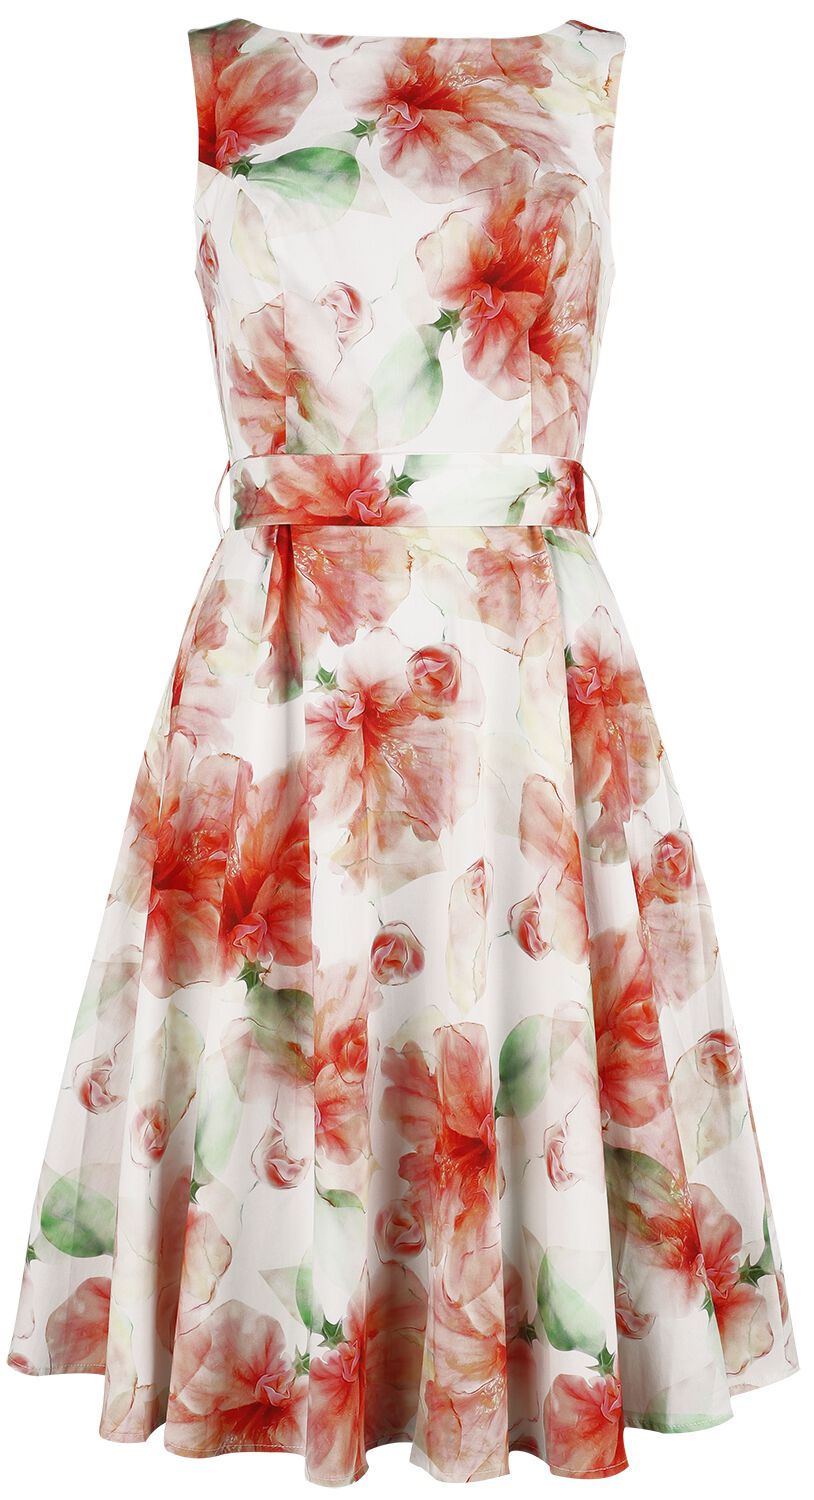 H&R London - Rockabilly Kleid knielang - Ayla Floral Swing Dress - XS bis 4XL - für Damen - Größe XL - multicolor